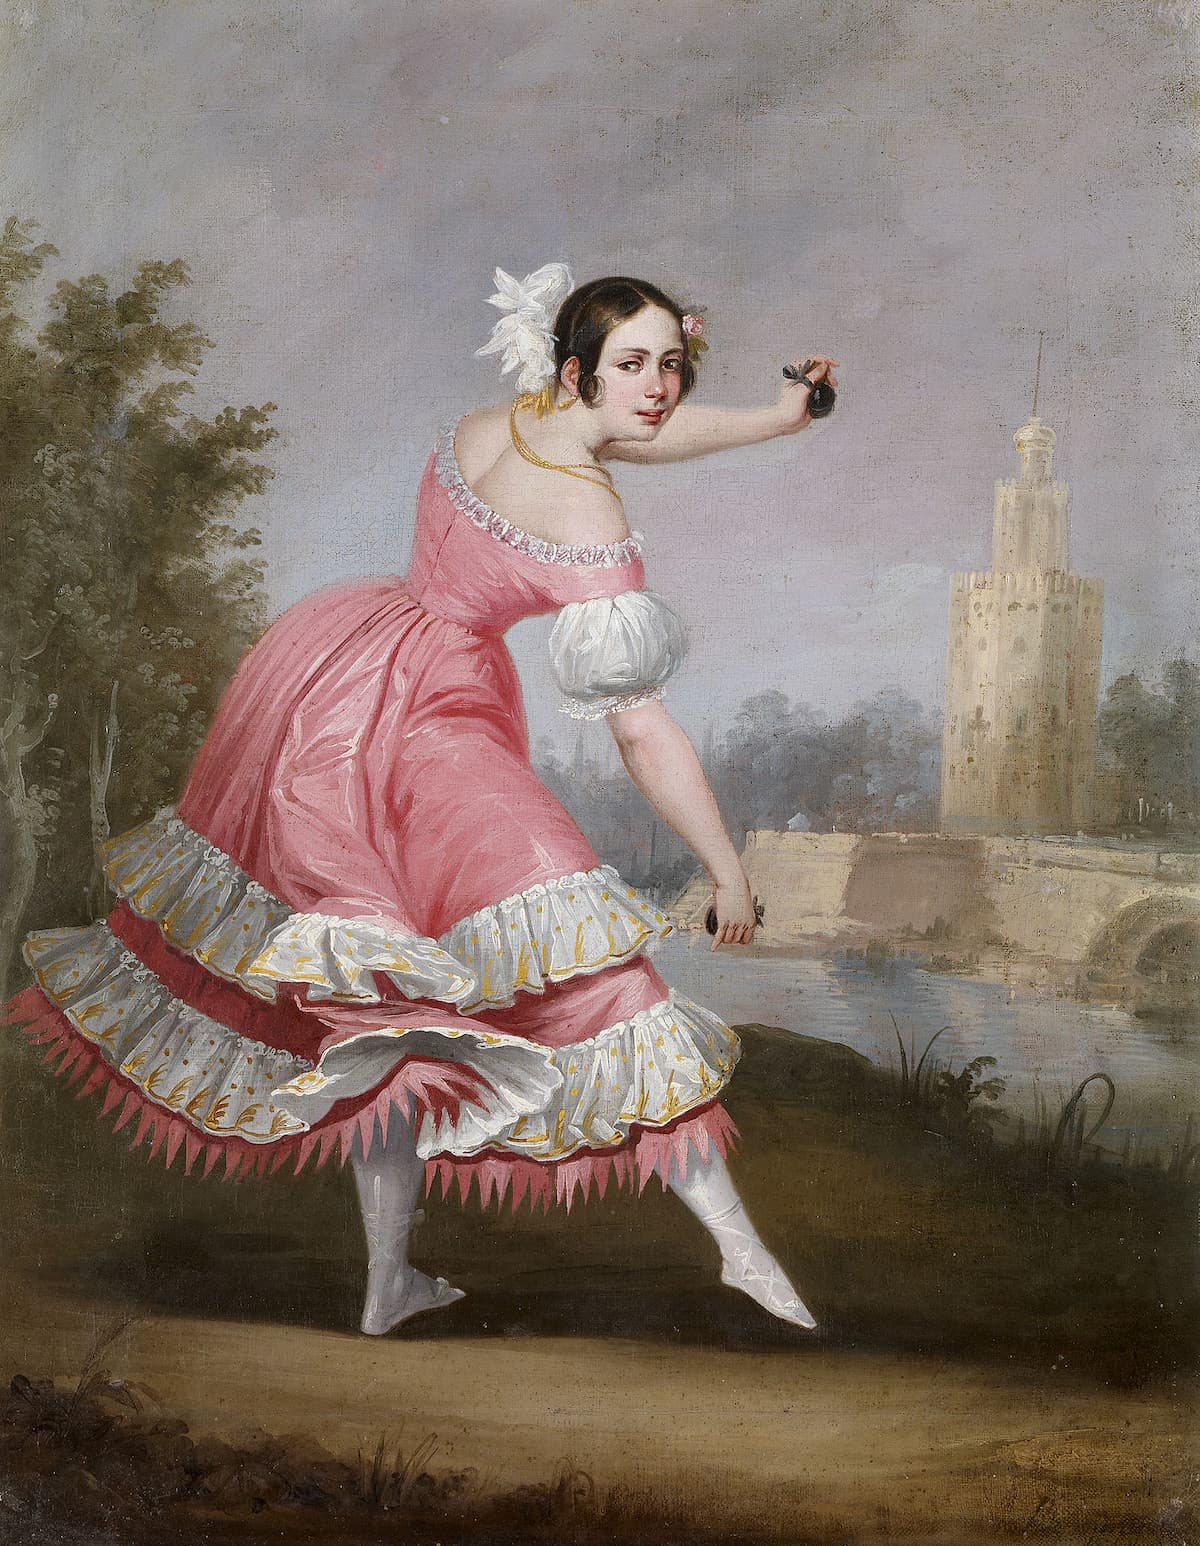 Antonio Cabral Bejarano: A Bolero Dancer, 1842 (Malagà, Spain: Carmen Thyssen Museum)